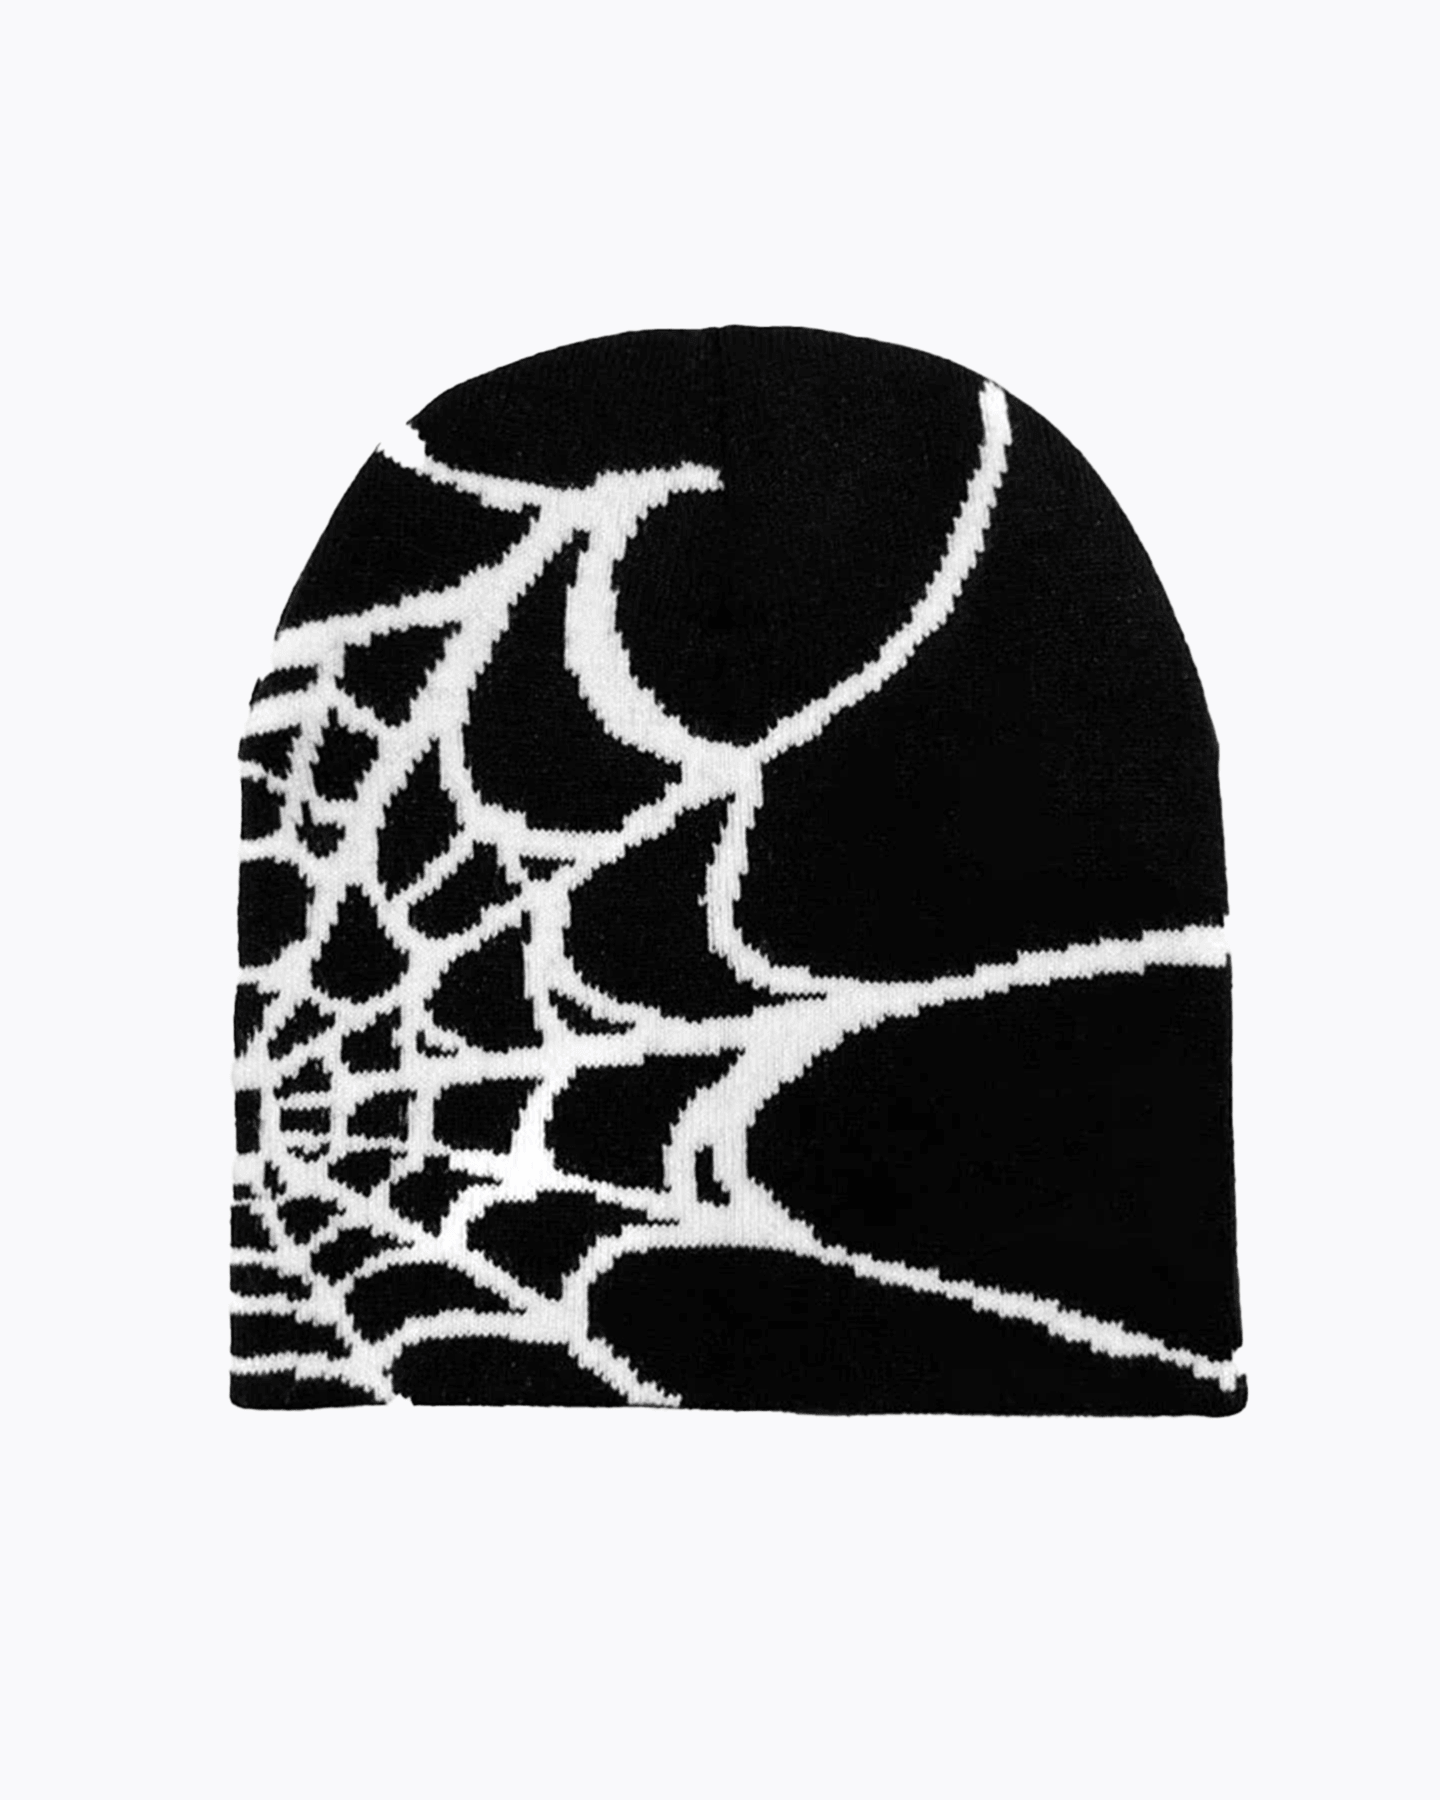 Spider Web Beanie - Sentient Official